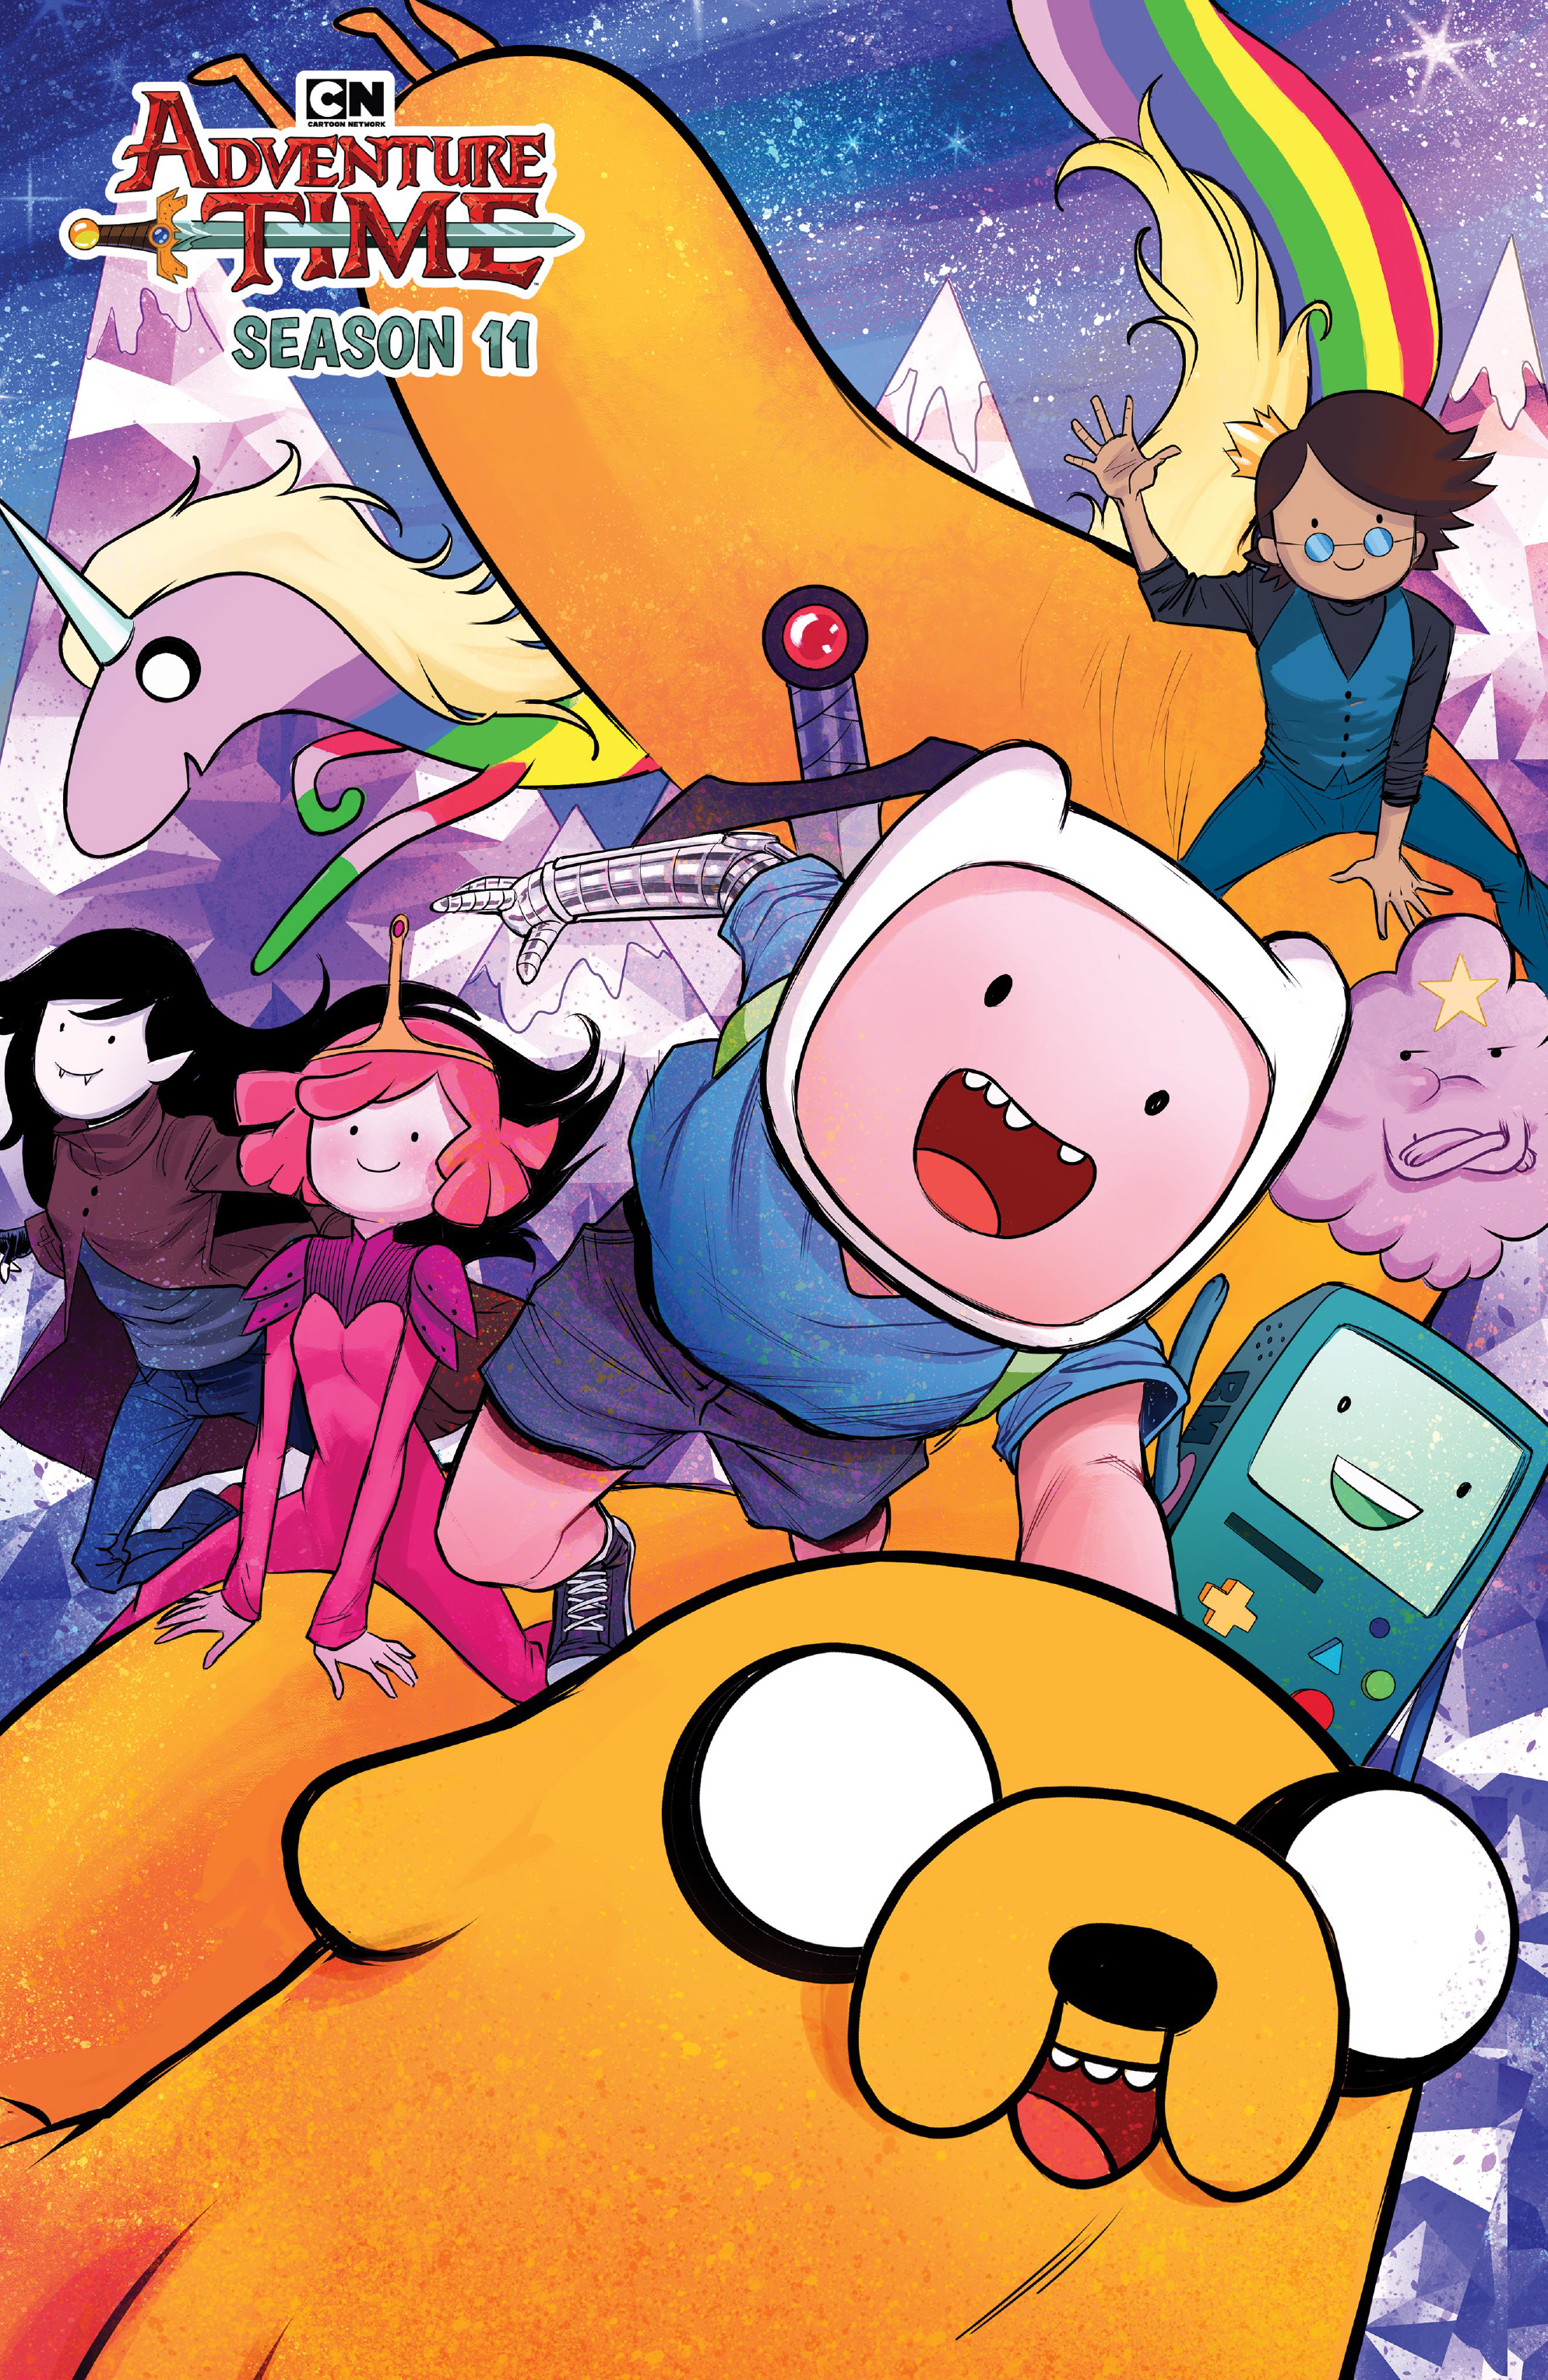 Adventure time season 11 comic